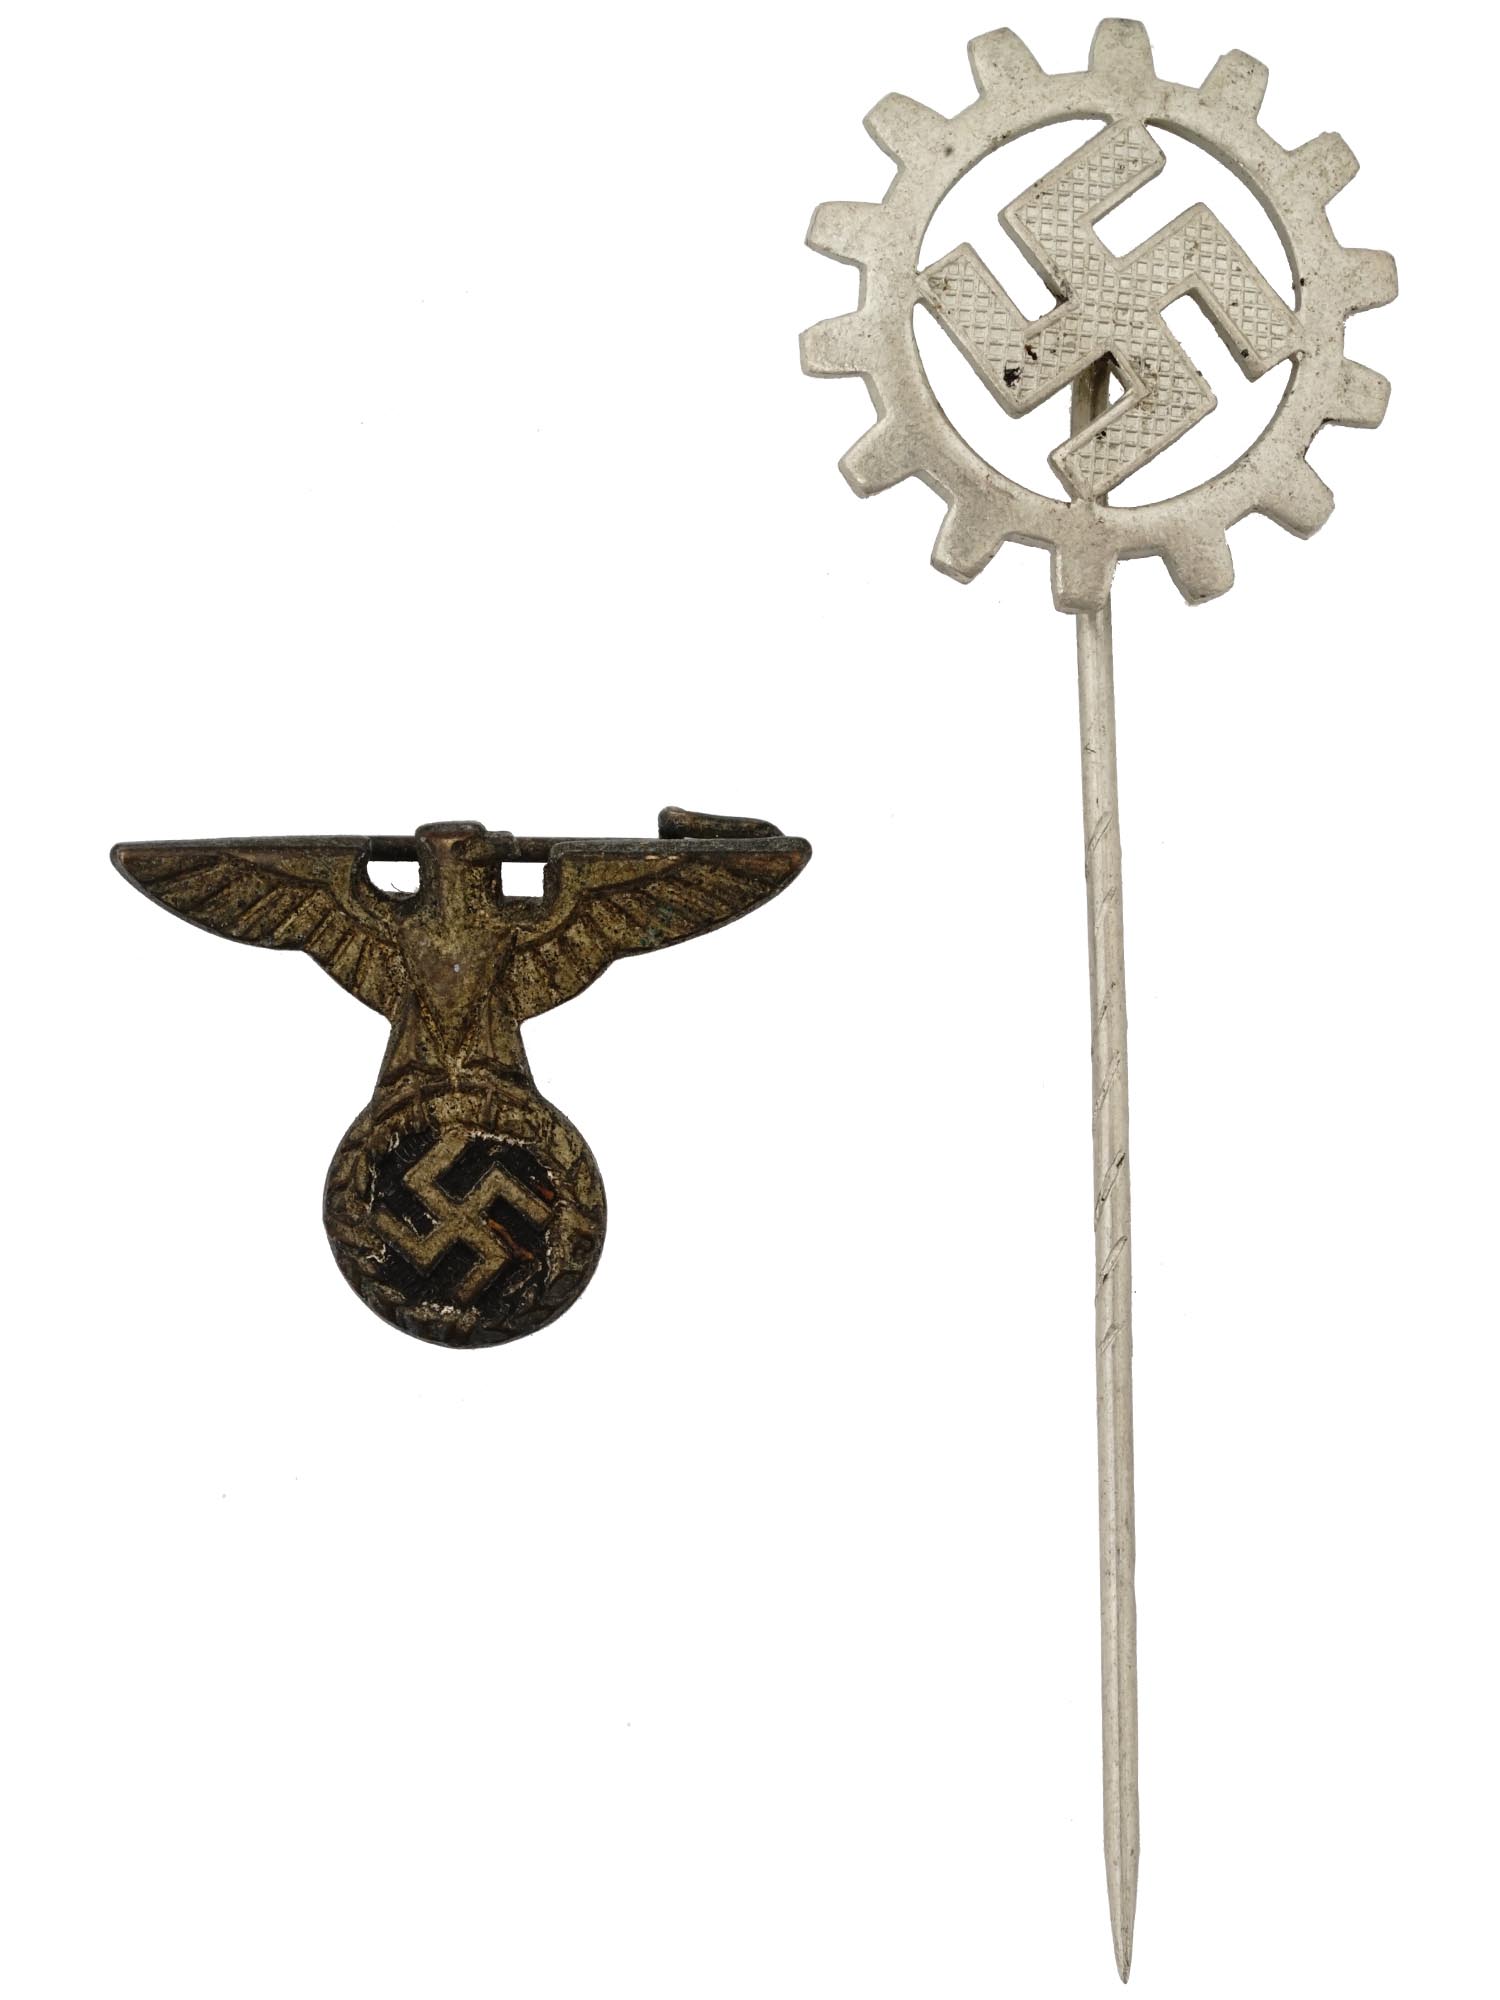 WWII NAZI GERMAN REICHSADLER AND SWASTIKA PINS PIC-1